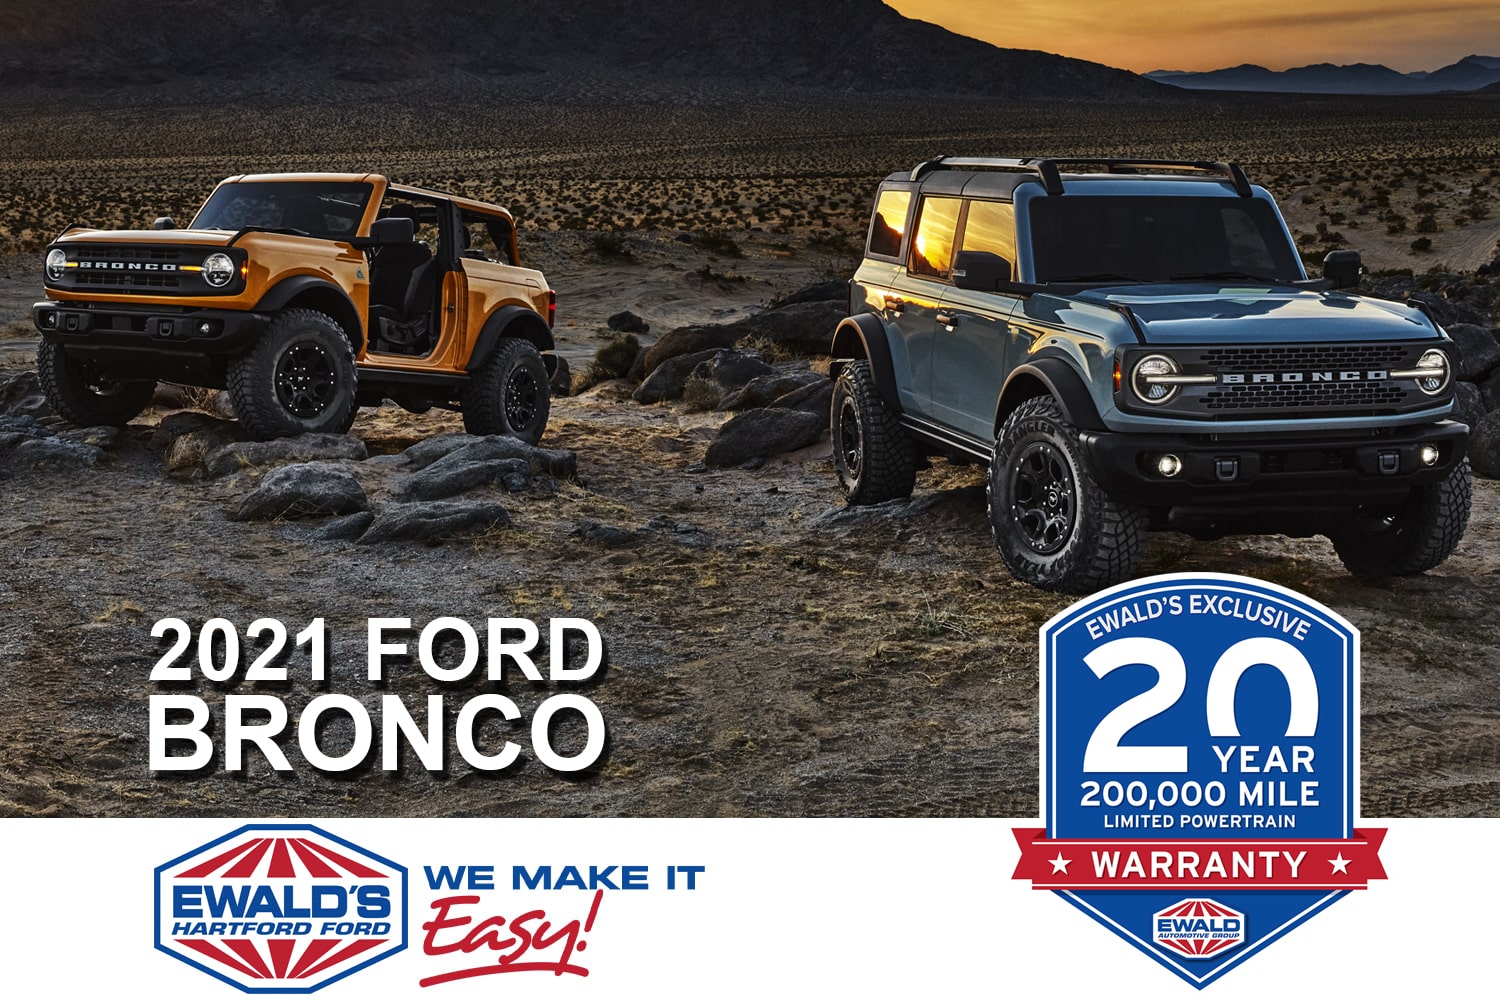 2021 Bronco at Ewald's Hartford Ford